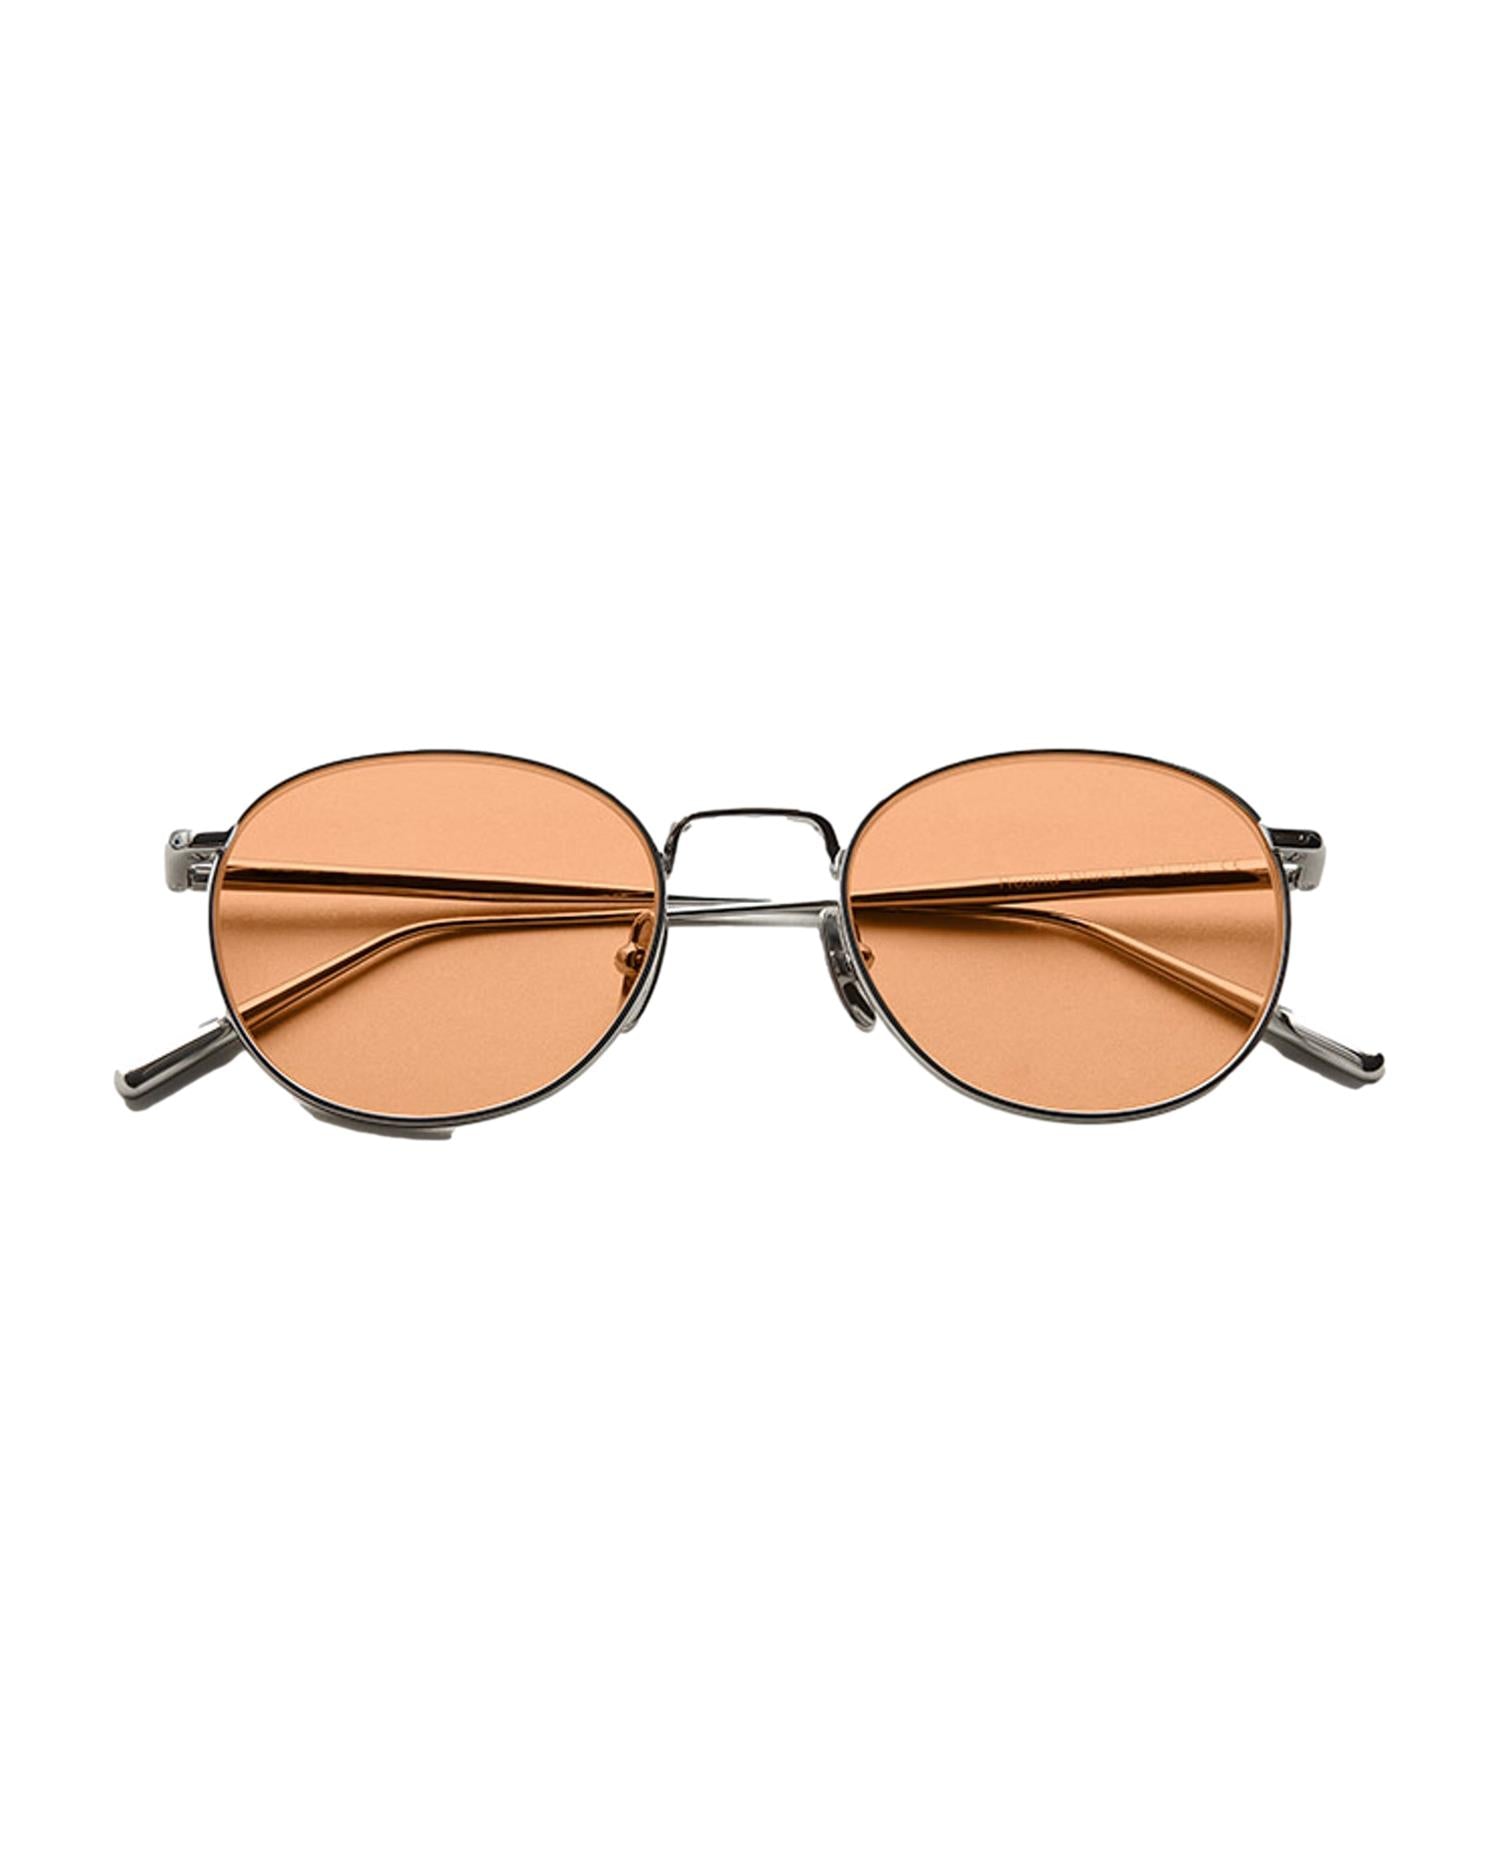 Chimi Eyewear Round Silver/Orange Solbriller Sølv / Gul